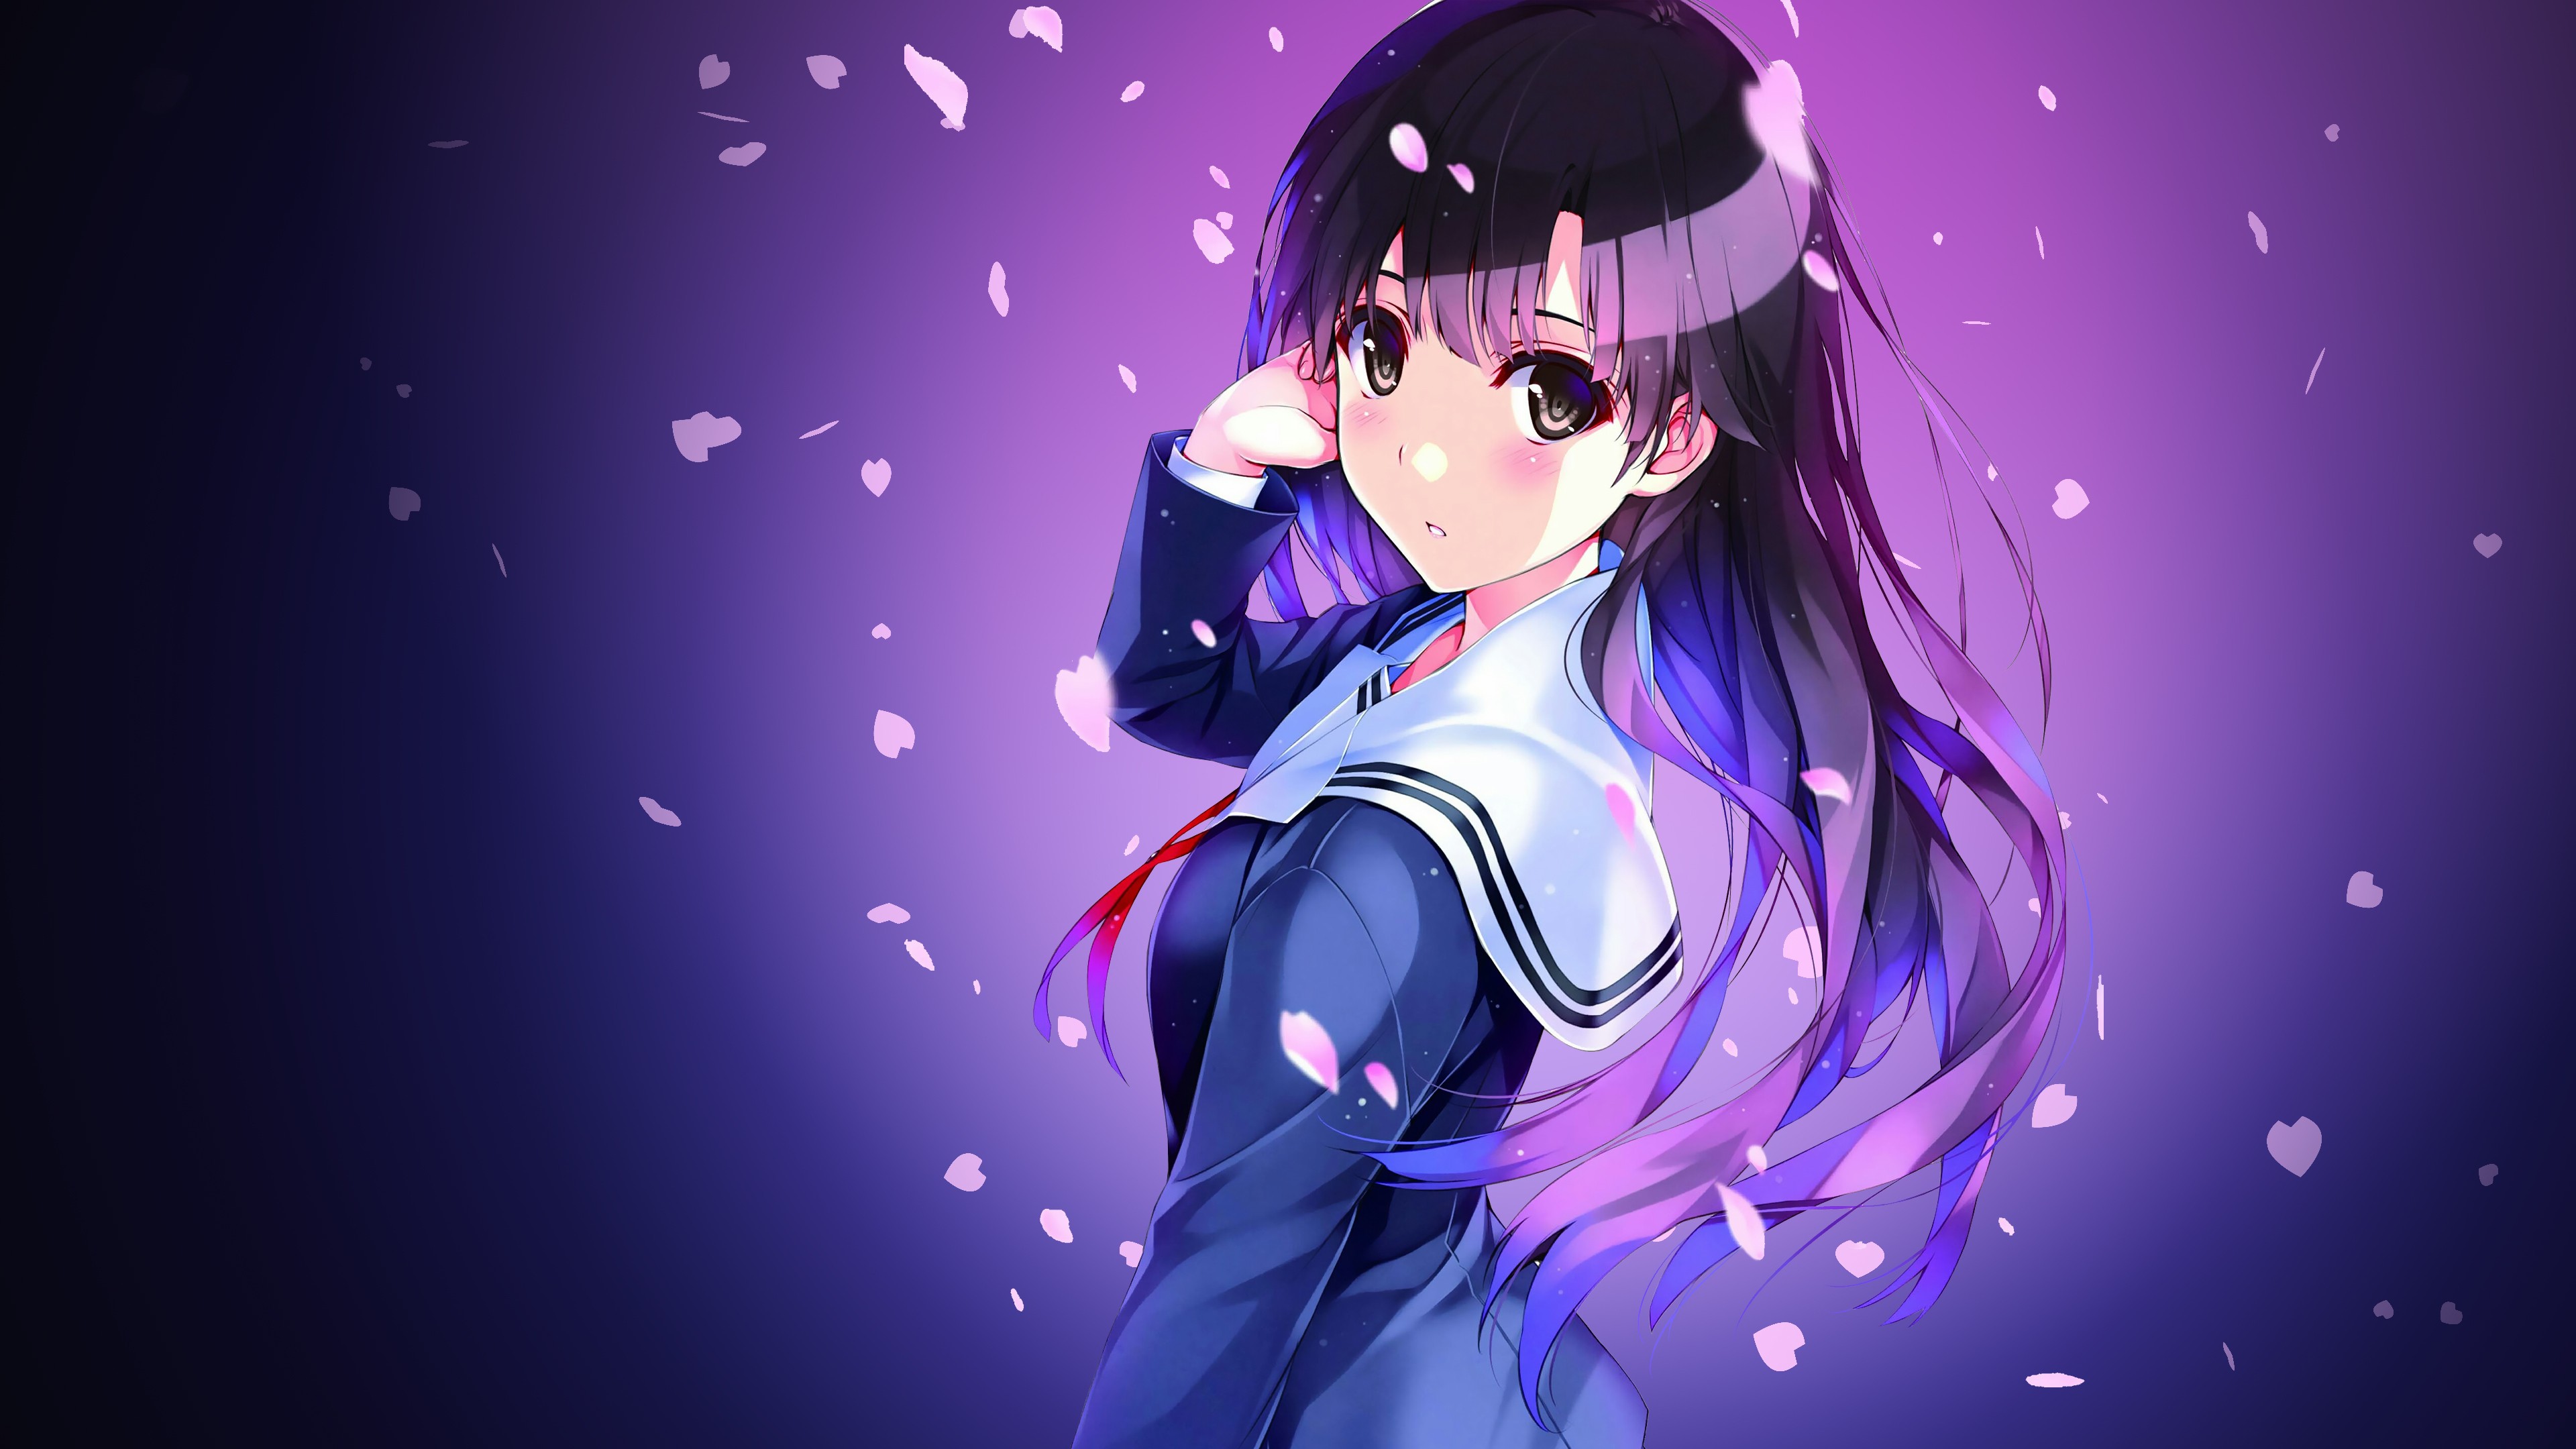 Anime Girls wallpaper ·① Download free beautiful ...